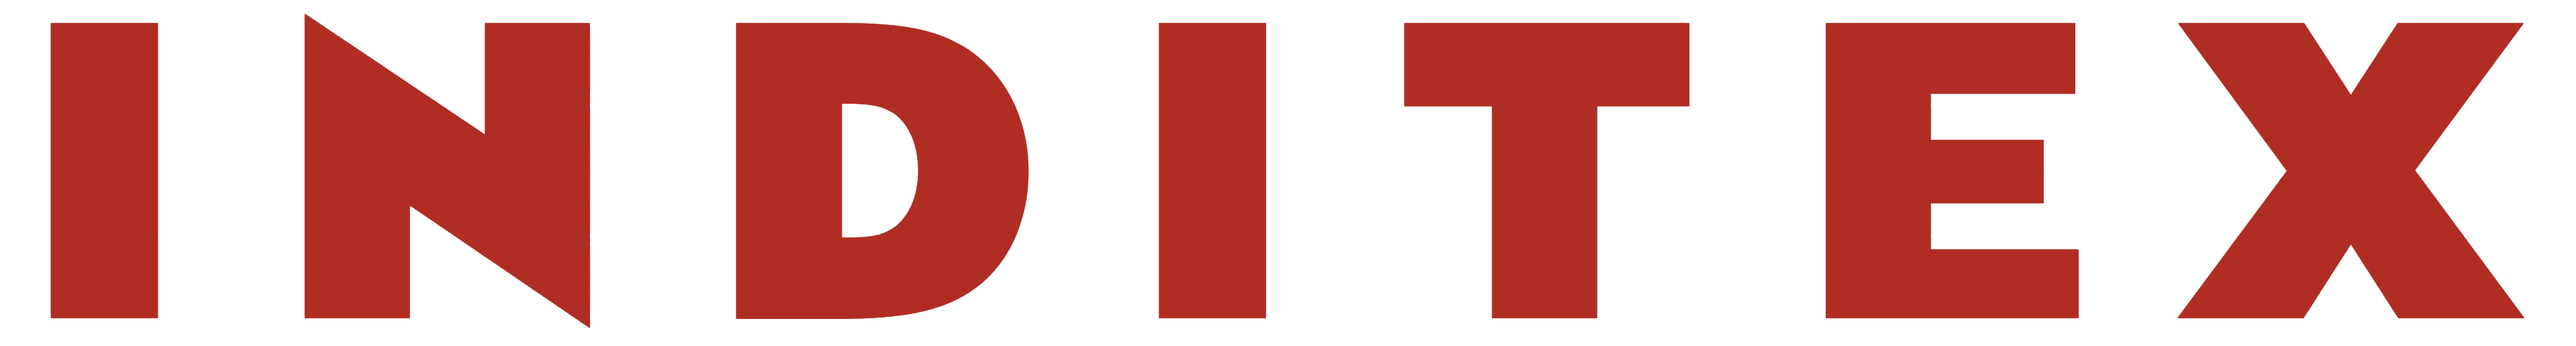 Inditex Logo - Inditex, Transparent background PNG HD thumbnail